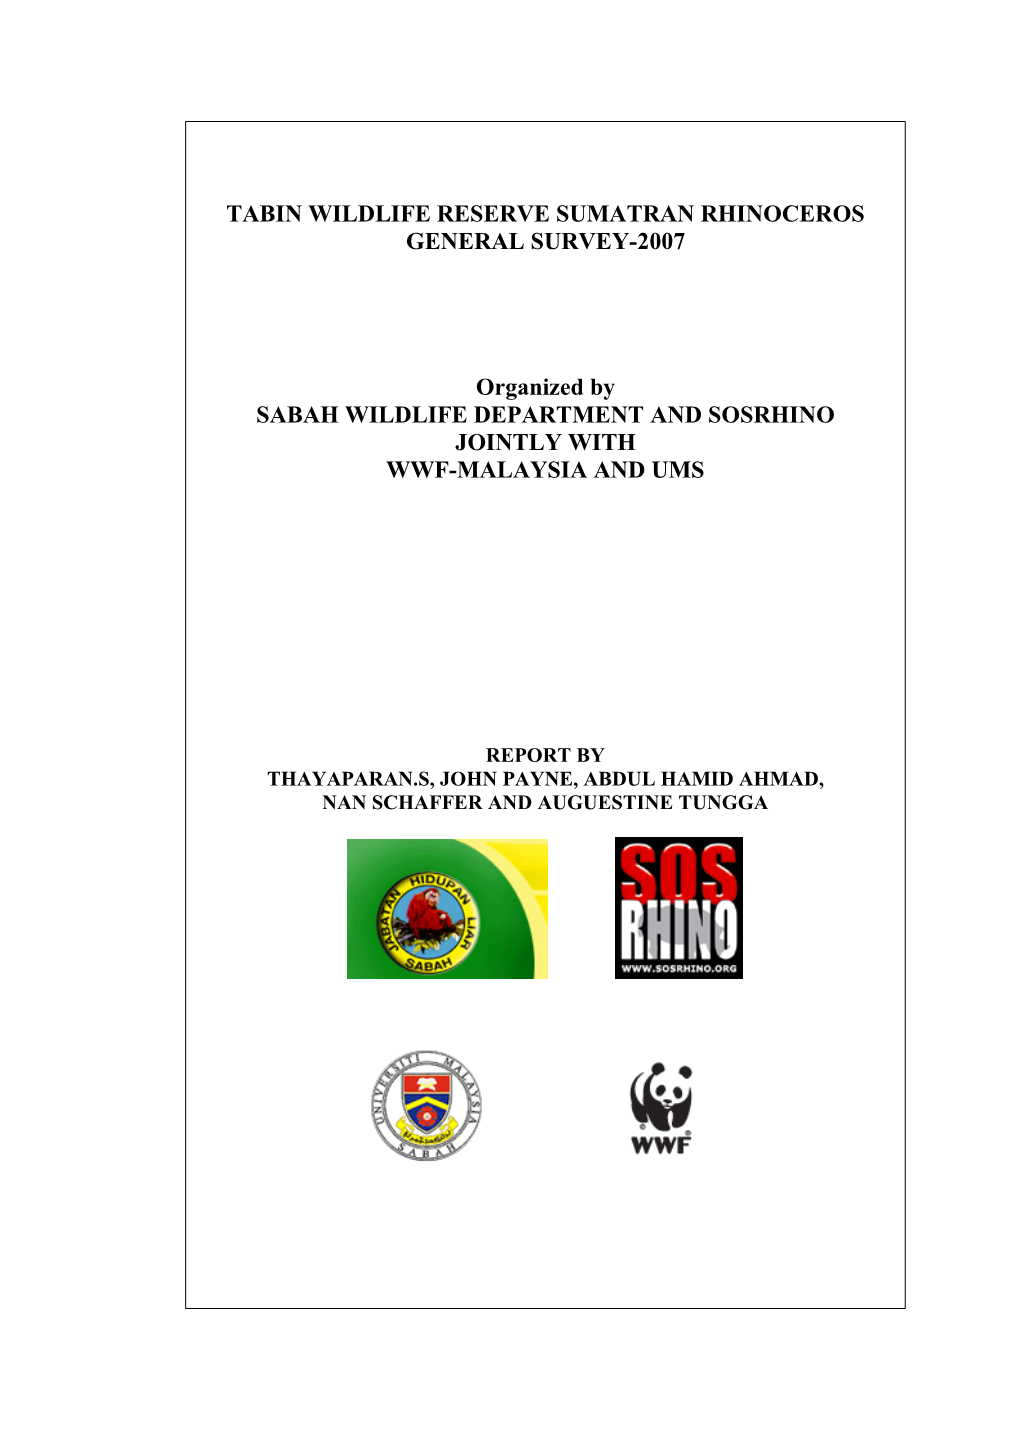 Tabin Wildlife Reserve Sumatran Rhinoceros General Survey-2007